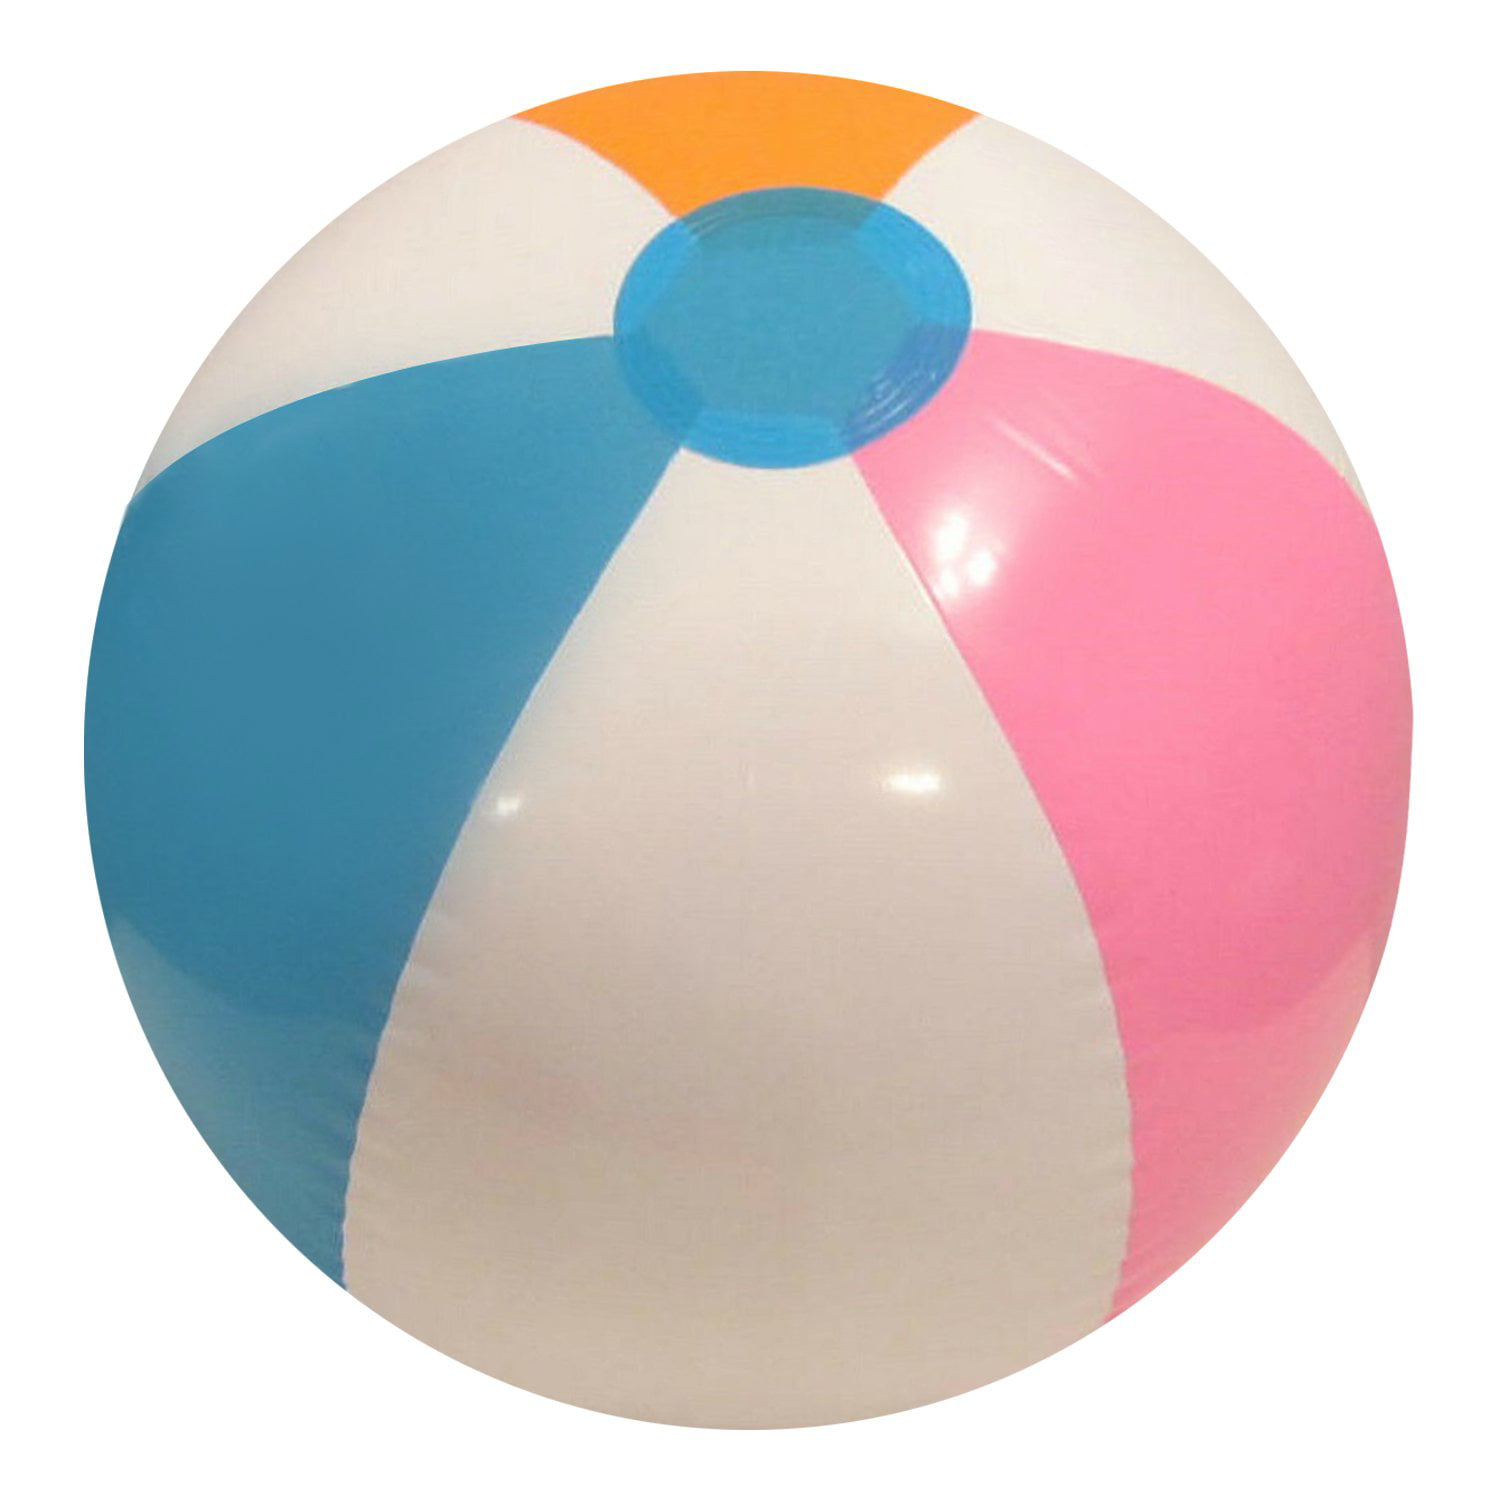 Details about   Intex Glossy Panel Beach Ball 20 Inch Inflatable 3 Pack Beach Summer Fun 